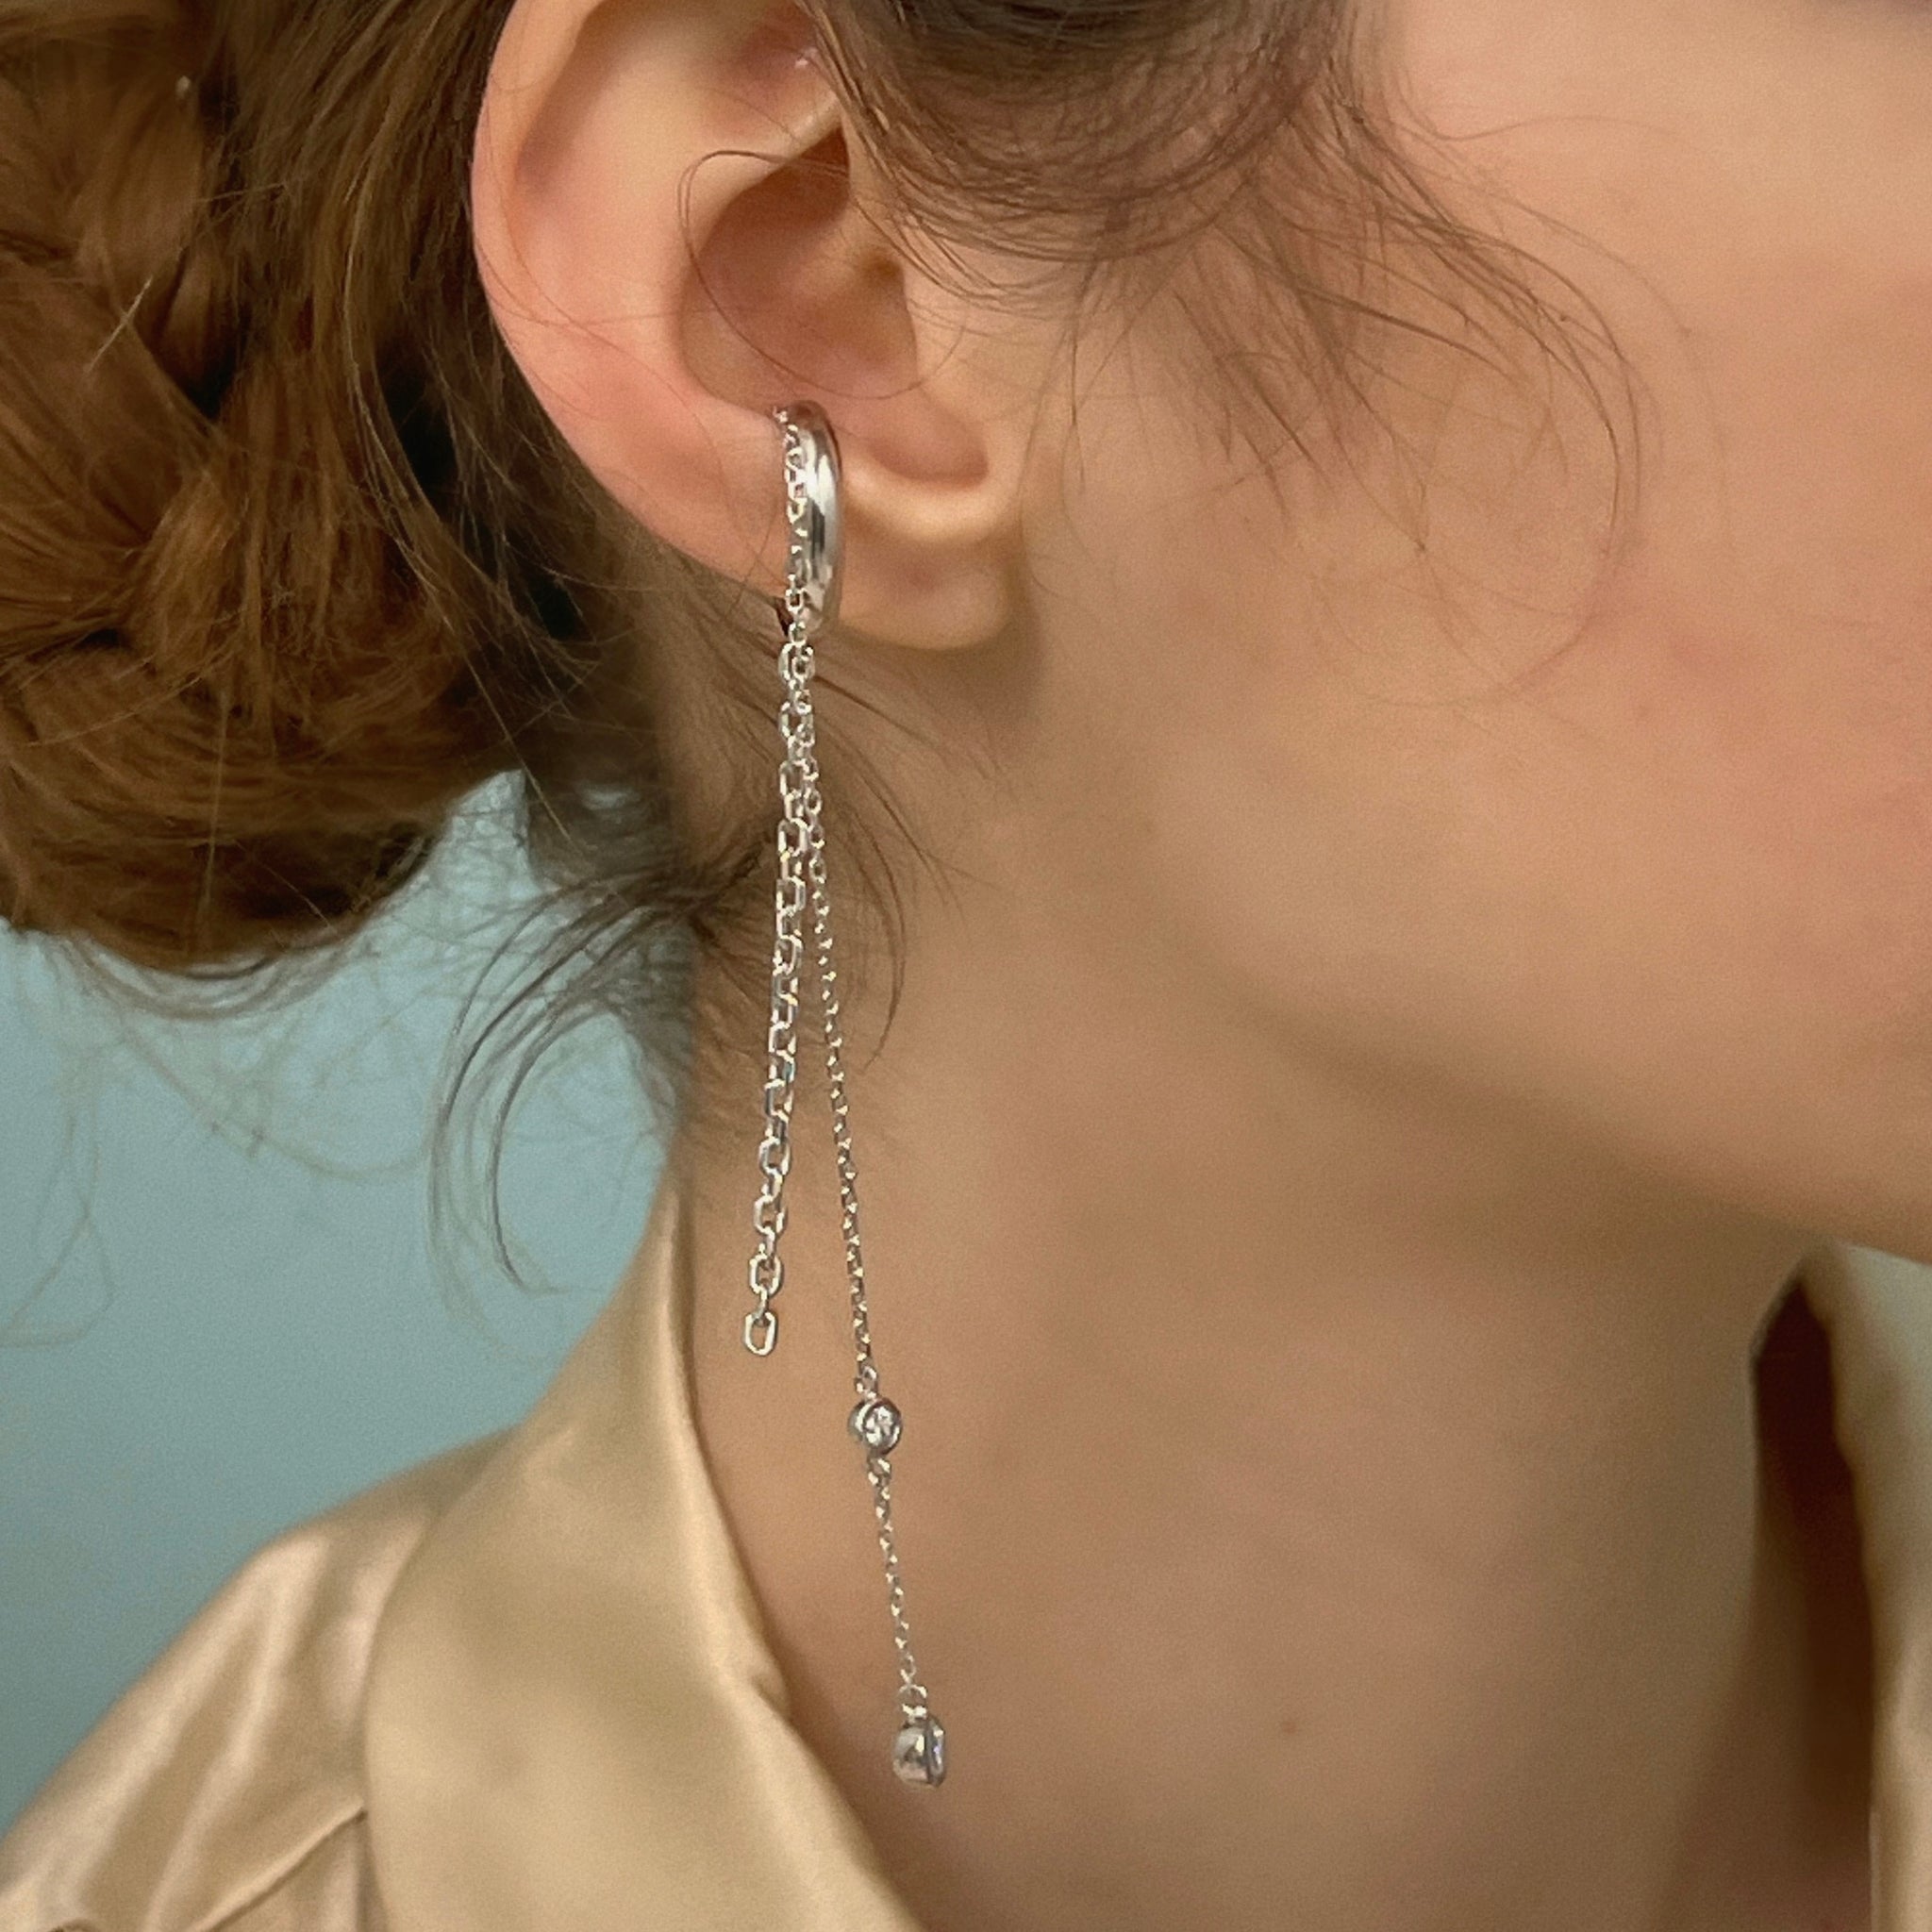 14k Gold Ear Cuff with Bezel Diamond Chain - Zoe Lev Jewelry